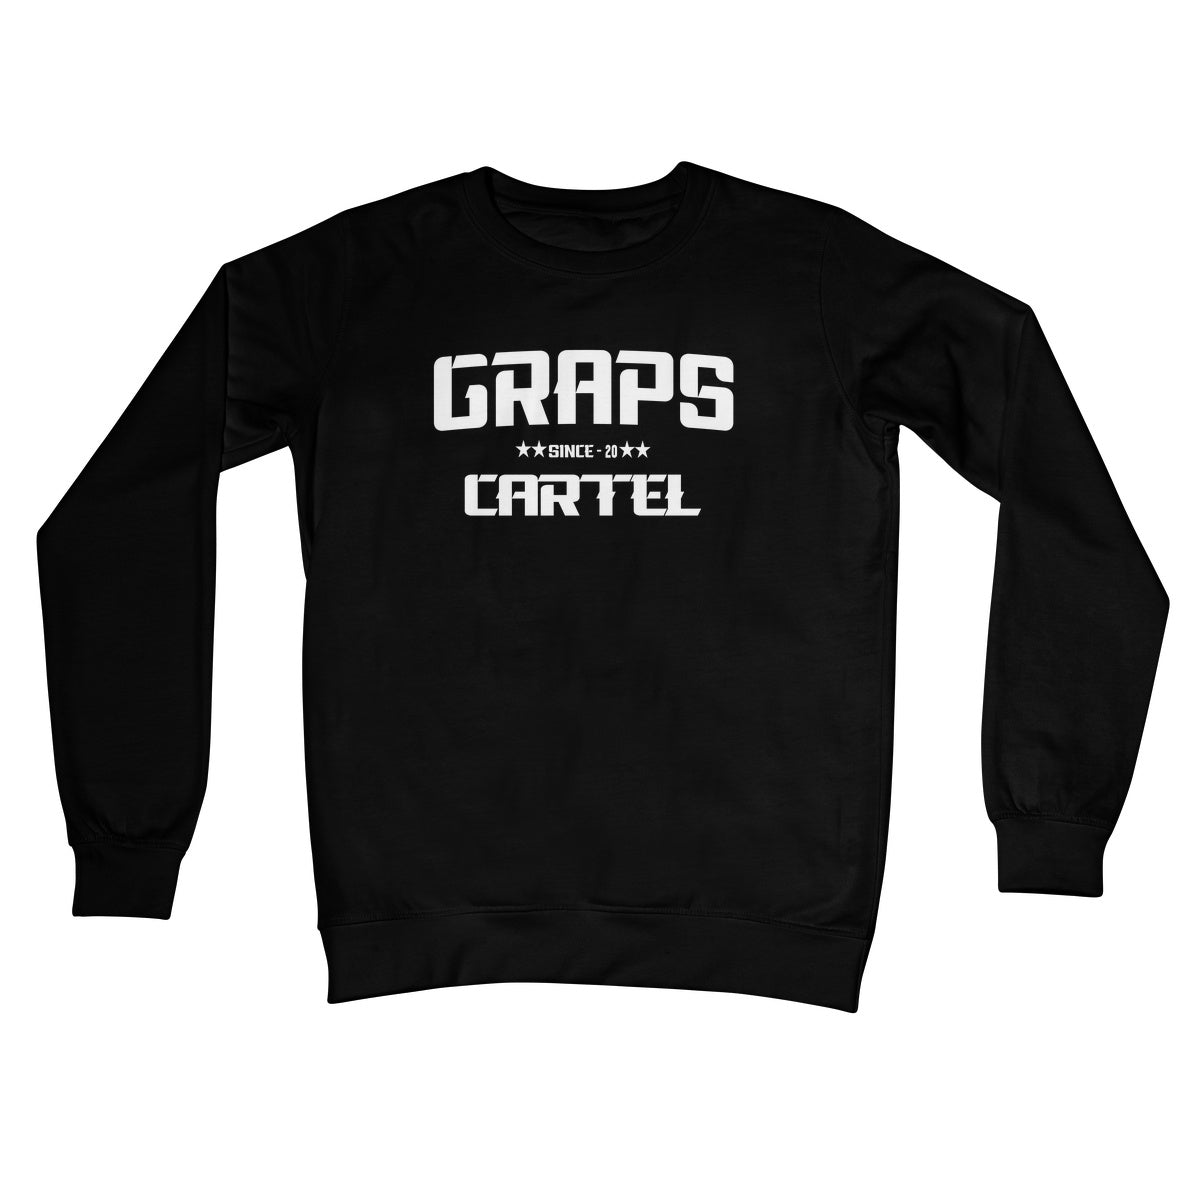 GRAPS - Cartel White Crew Neck Sweatshirt